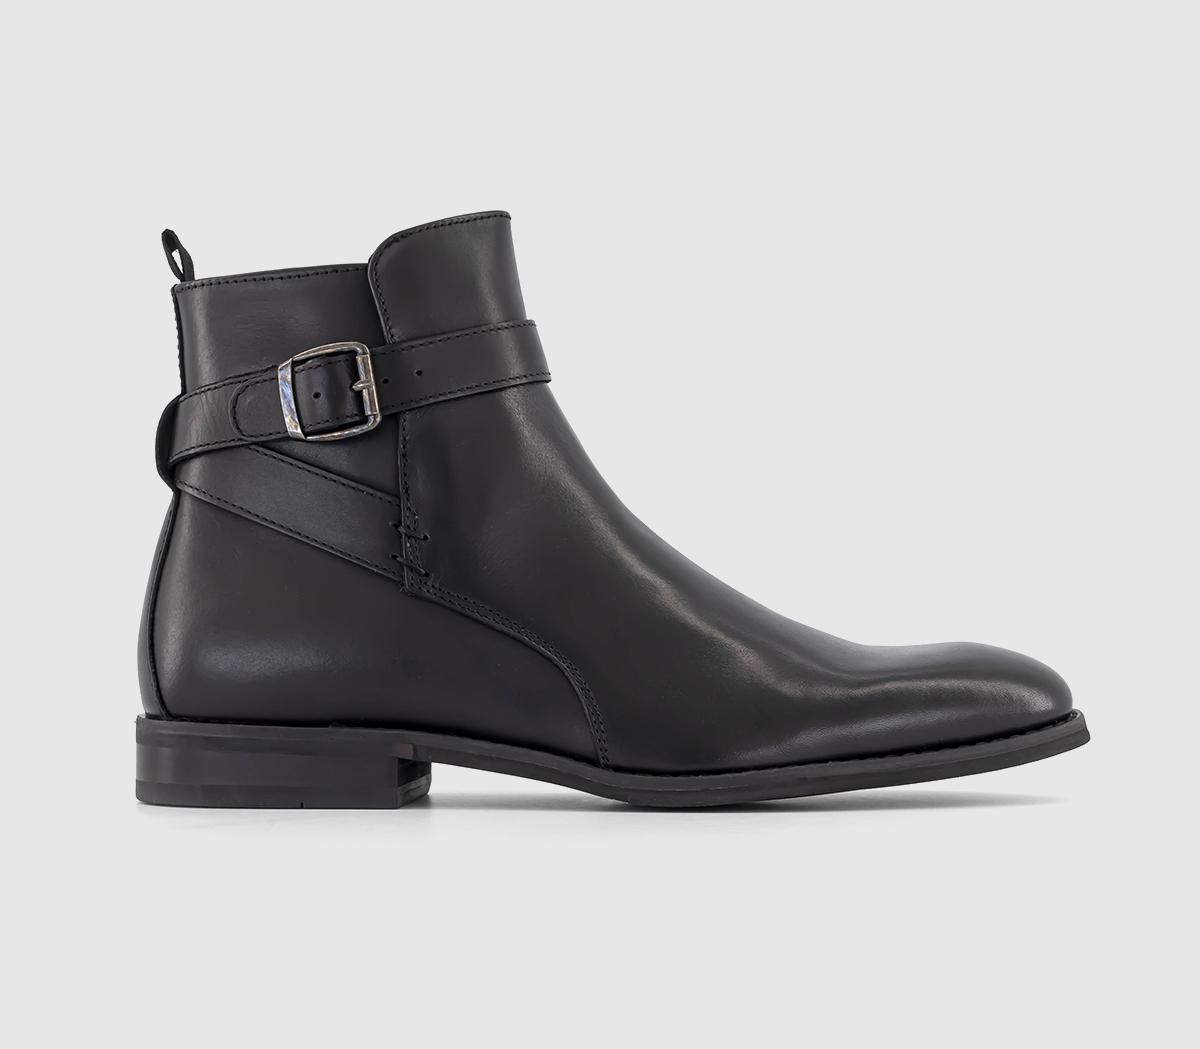 OFFICEBelfort Ankle Strap BootsBlack Leather